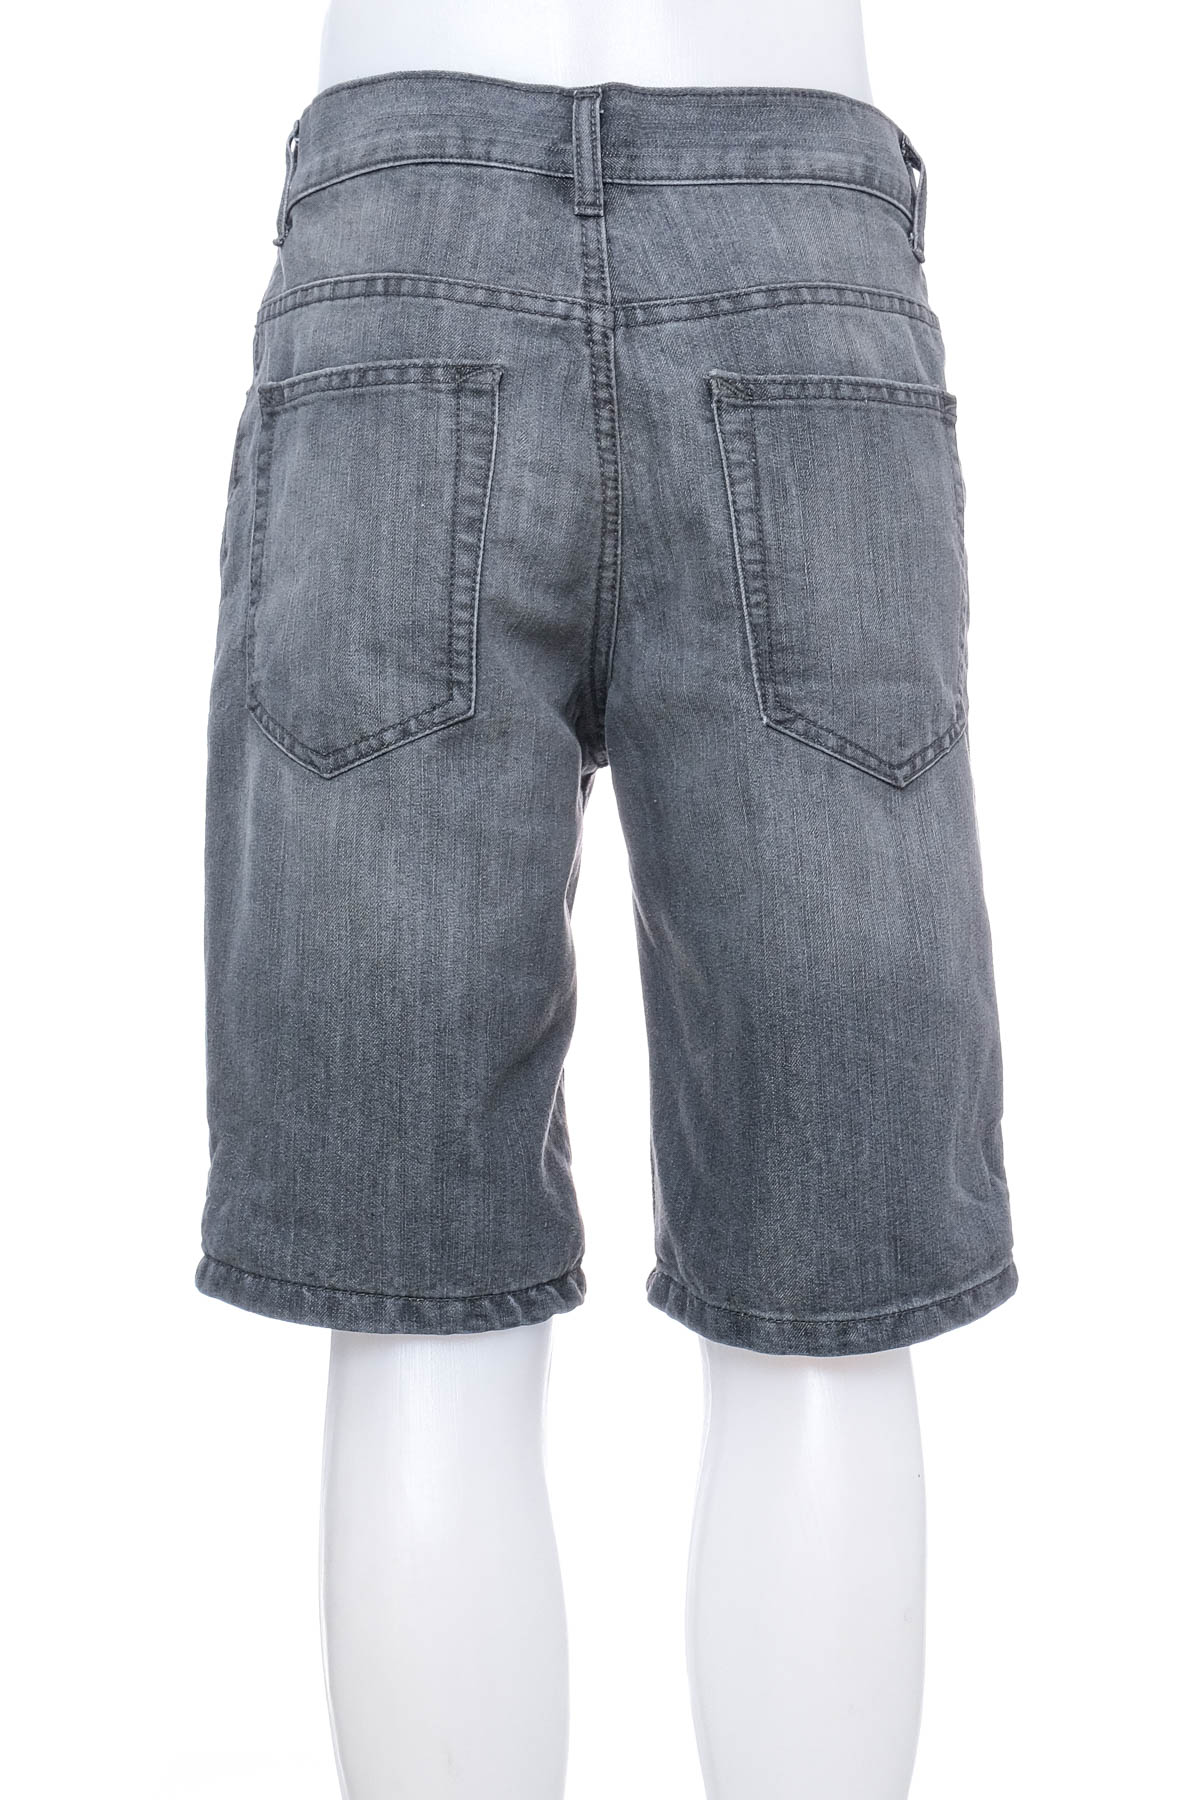 Men's shorts - Denim Co - 1